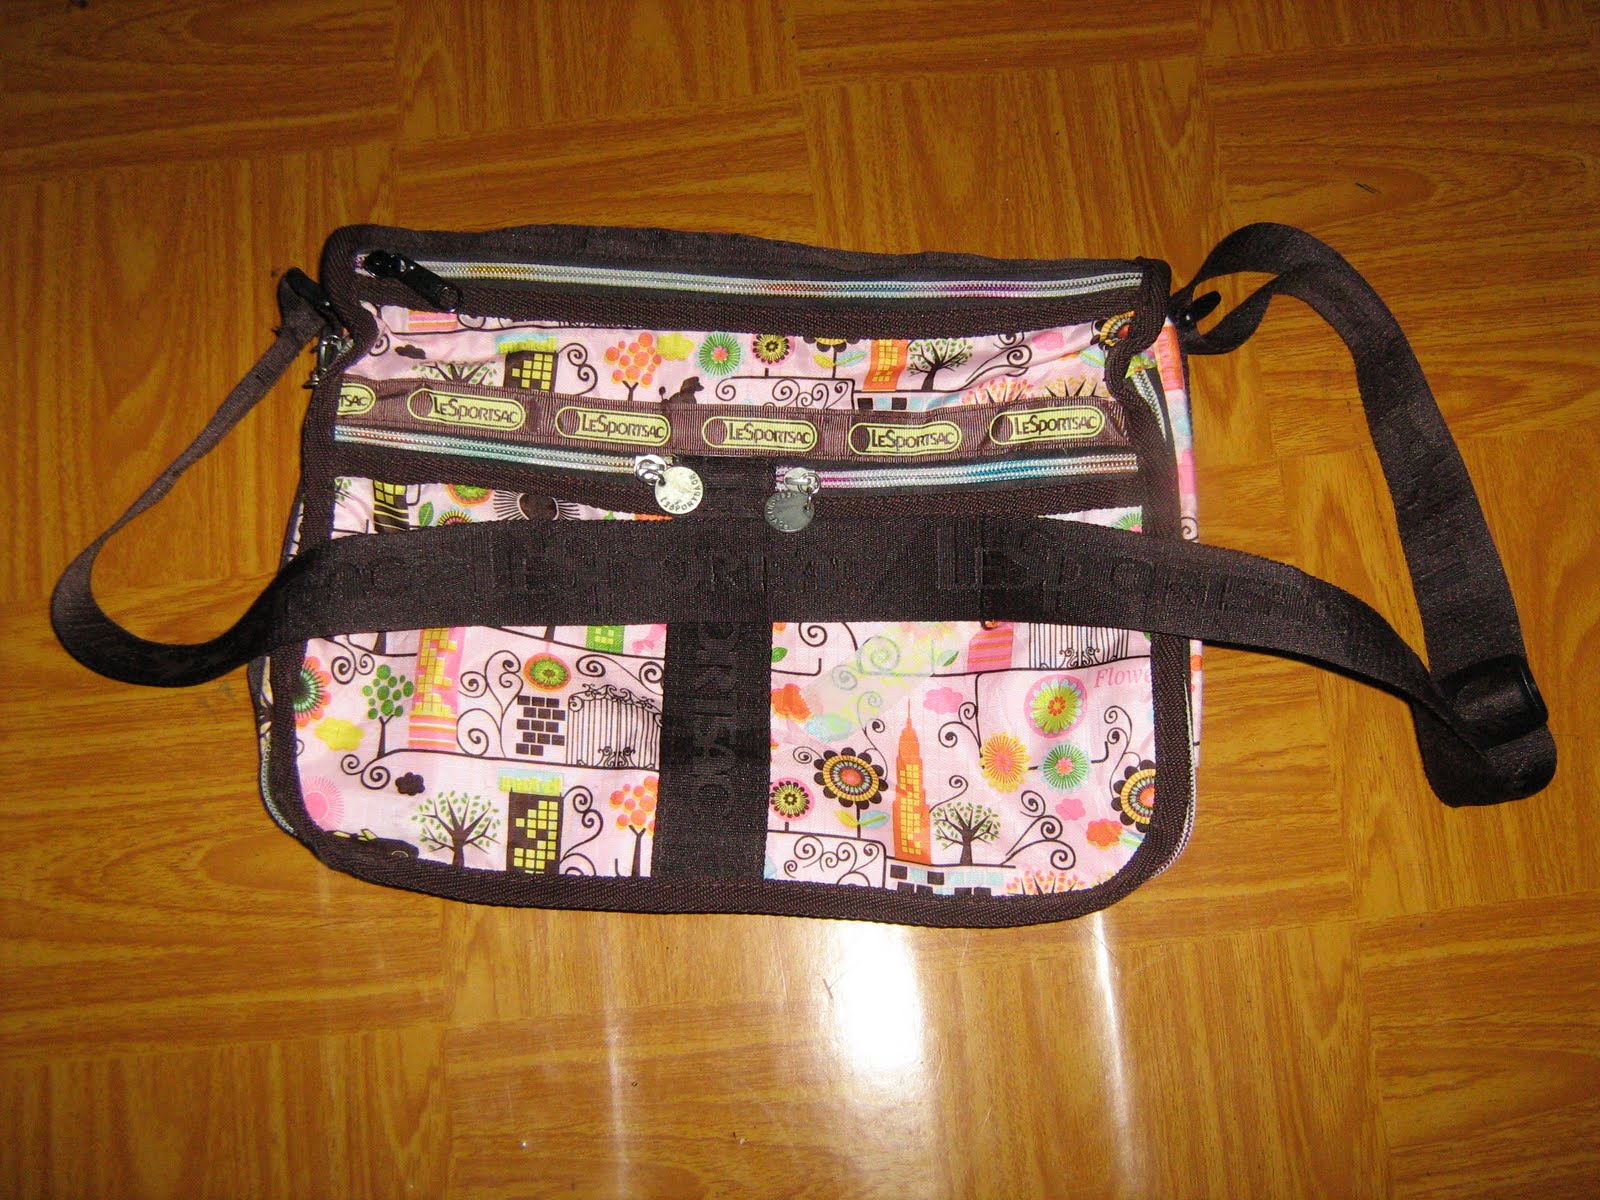 zeppelinbundle: le Sportsac sling bag limited edition